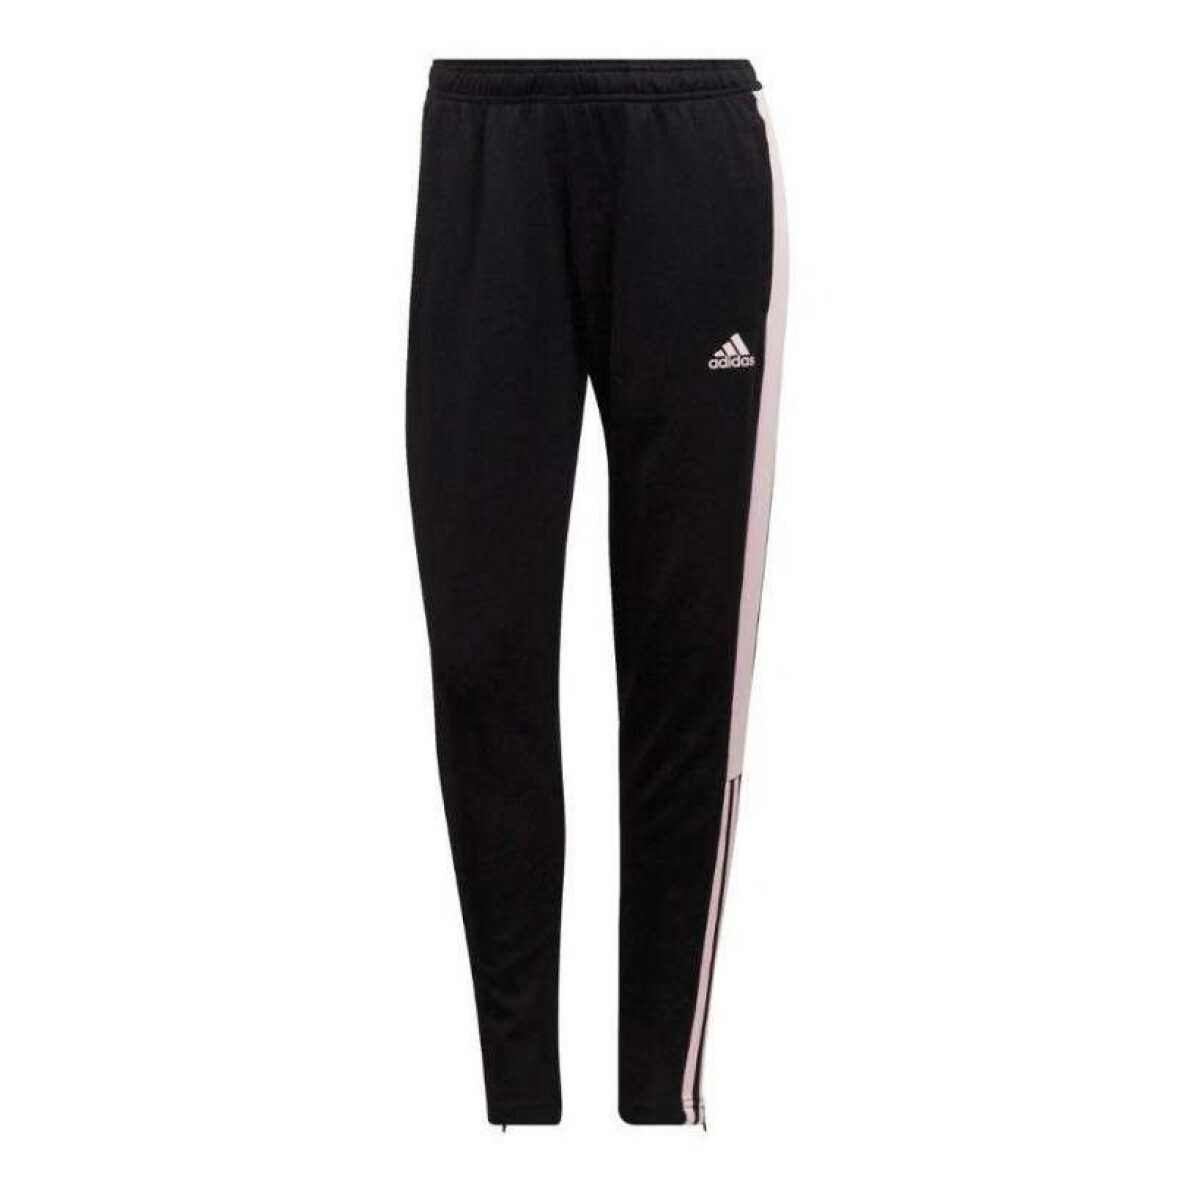 Pantalon Tiro Wns Adidas - Negro/Rosa 